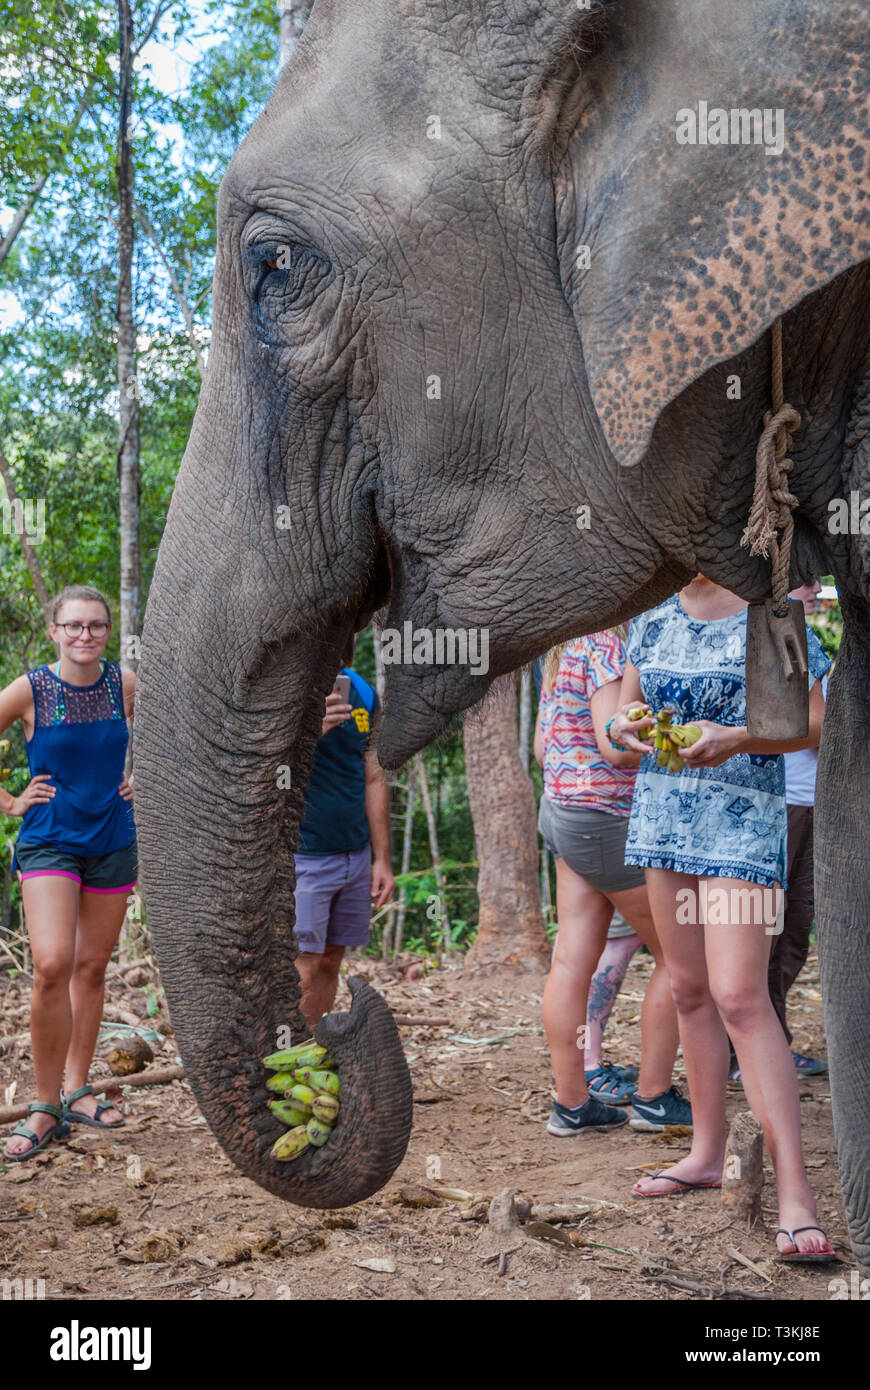 Chiang Mai, Thailand - Nov 2015: Group of women feeding elephant with bananas in elephant sanctuary, Thailand Stock Photo